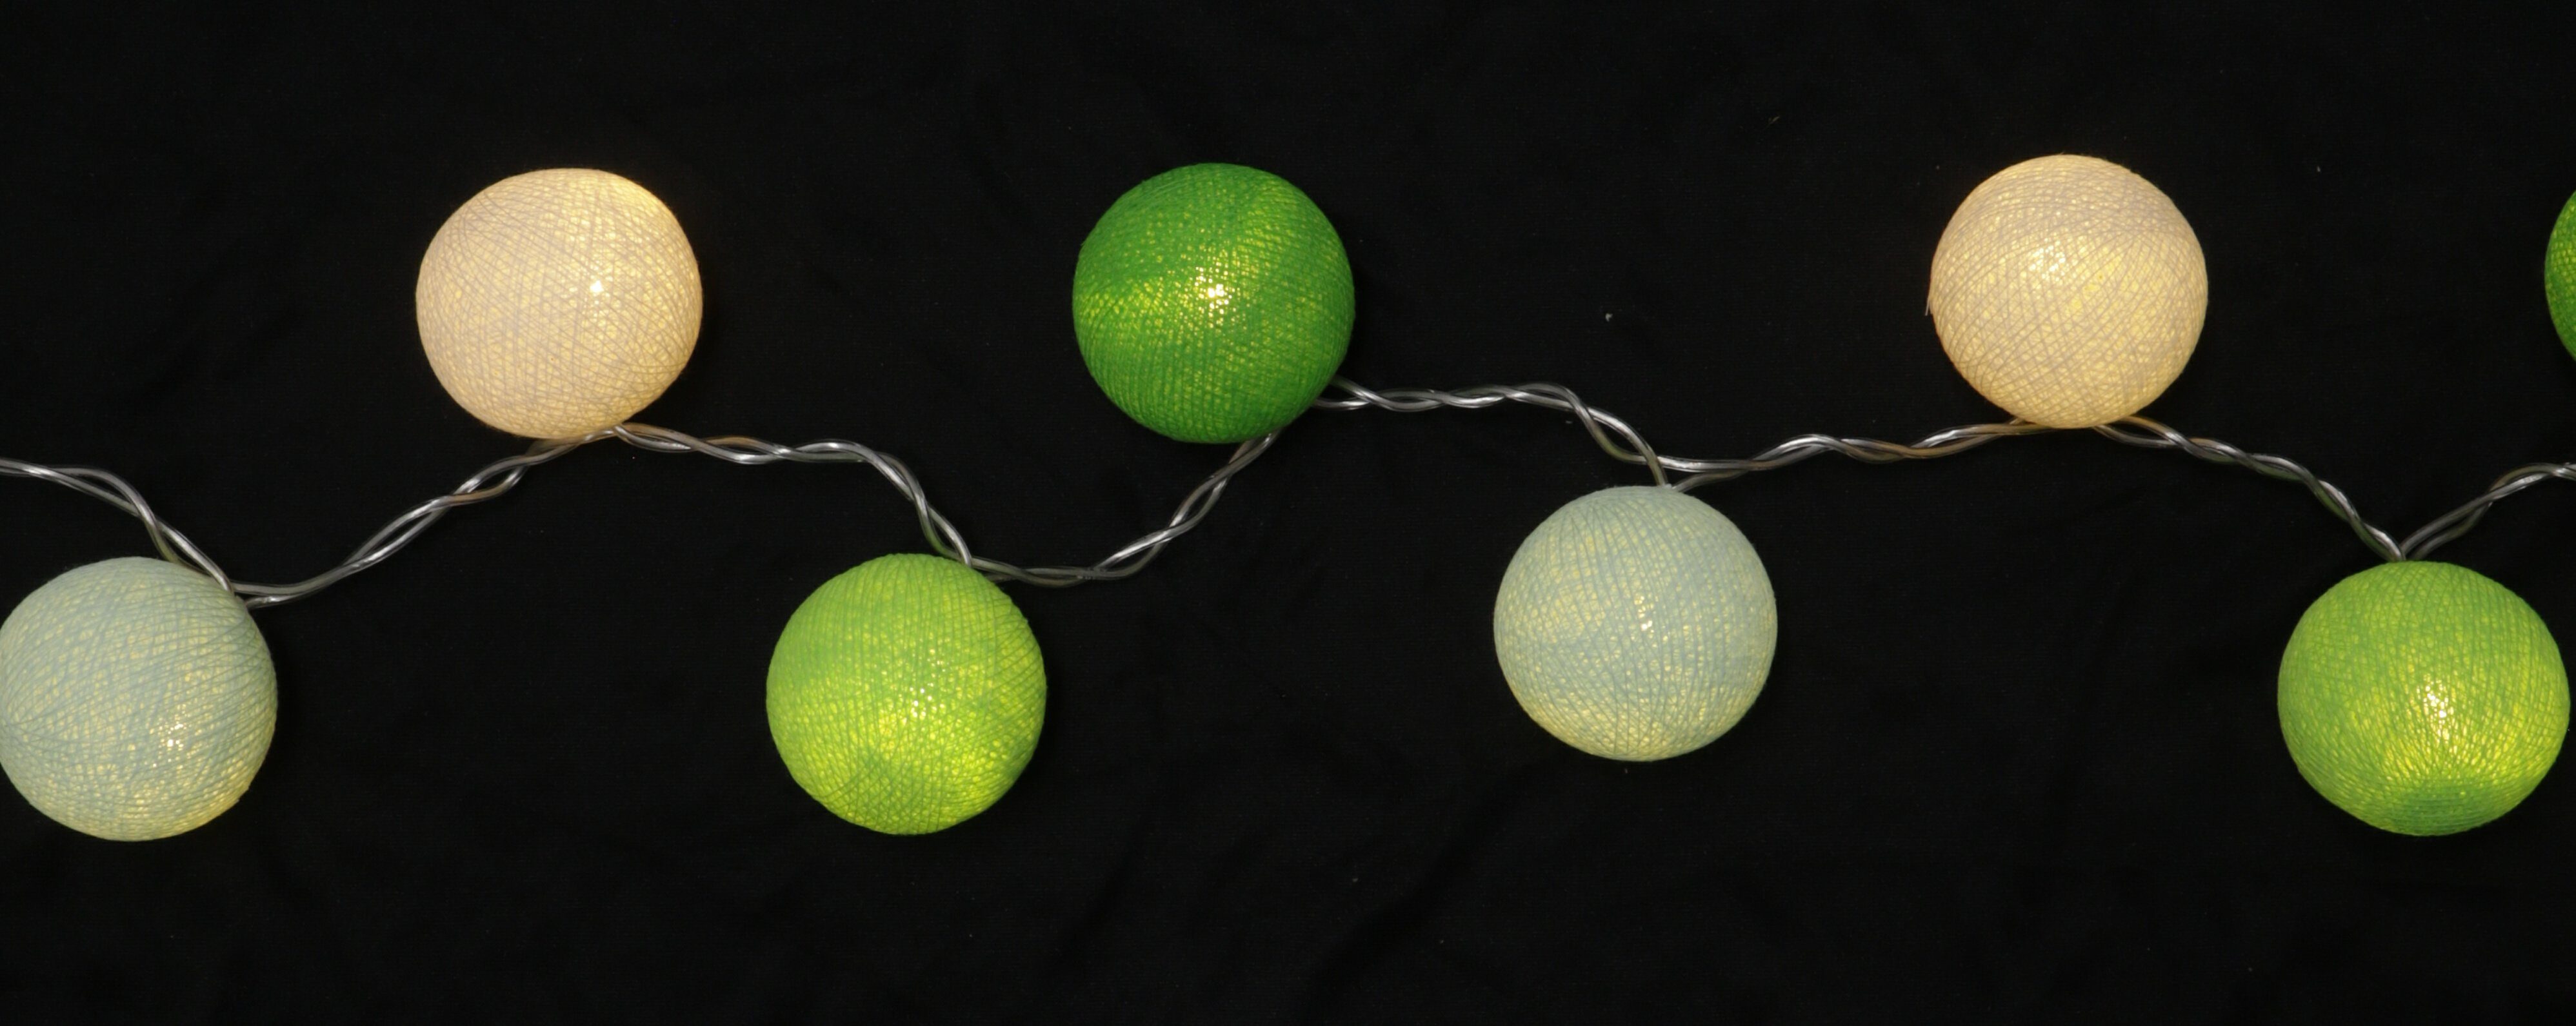 Guru-Shop Stoff LED-Lichterkette grün/weiß Kugel Lichterkette LED Ball Lampion..